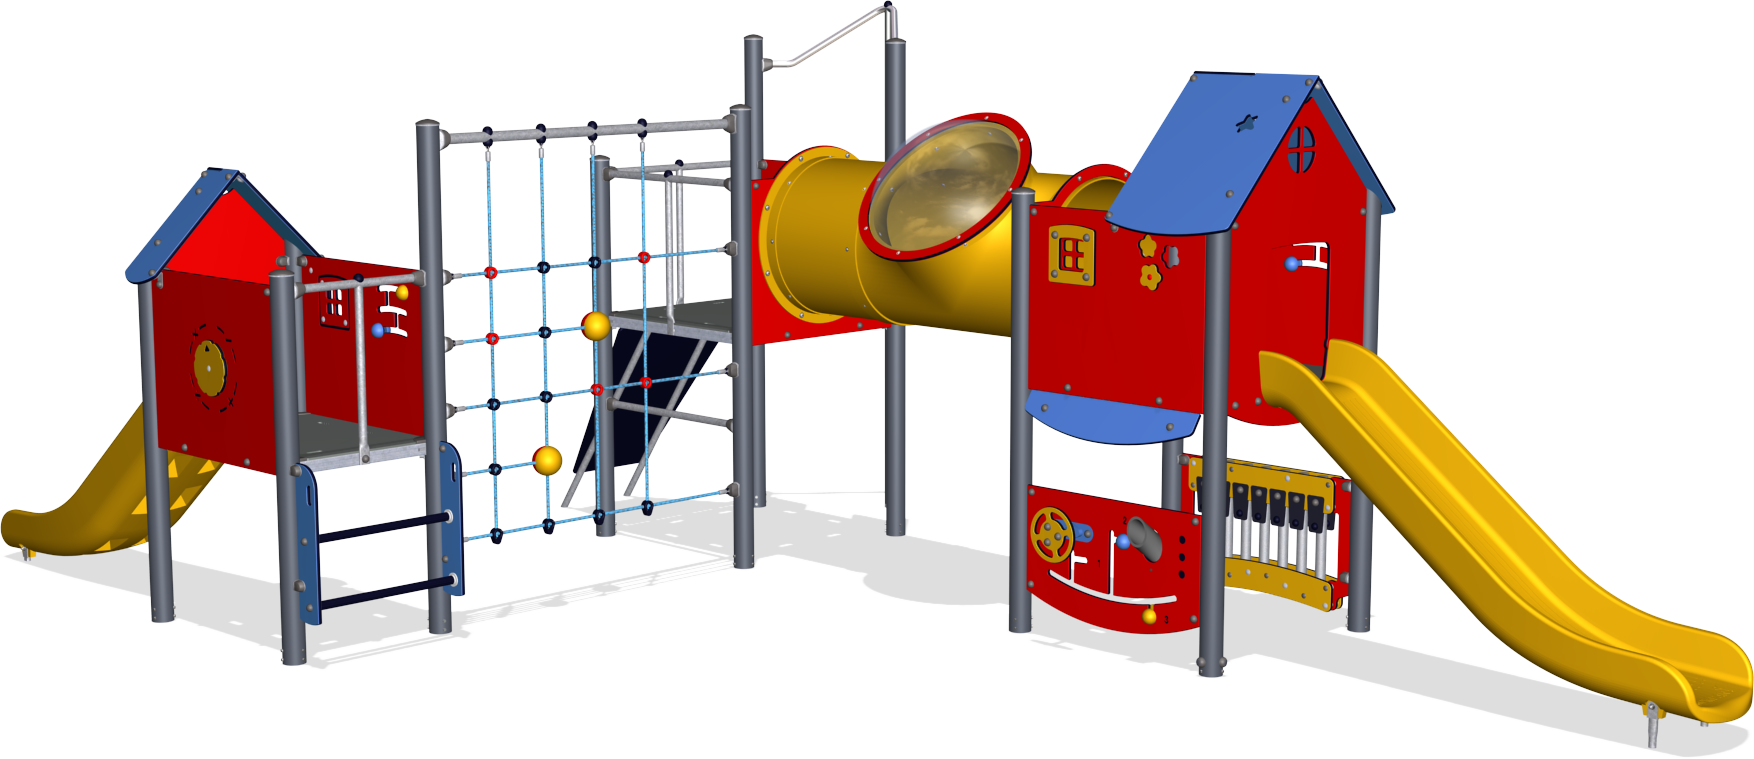 clipart park playground equipment